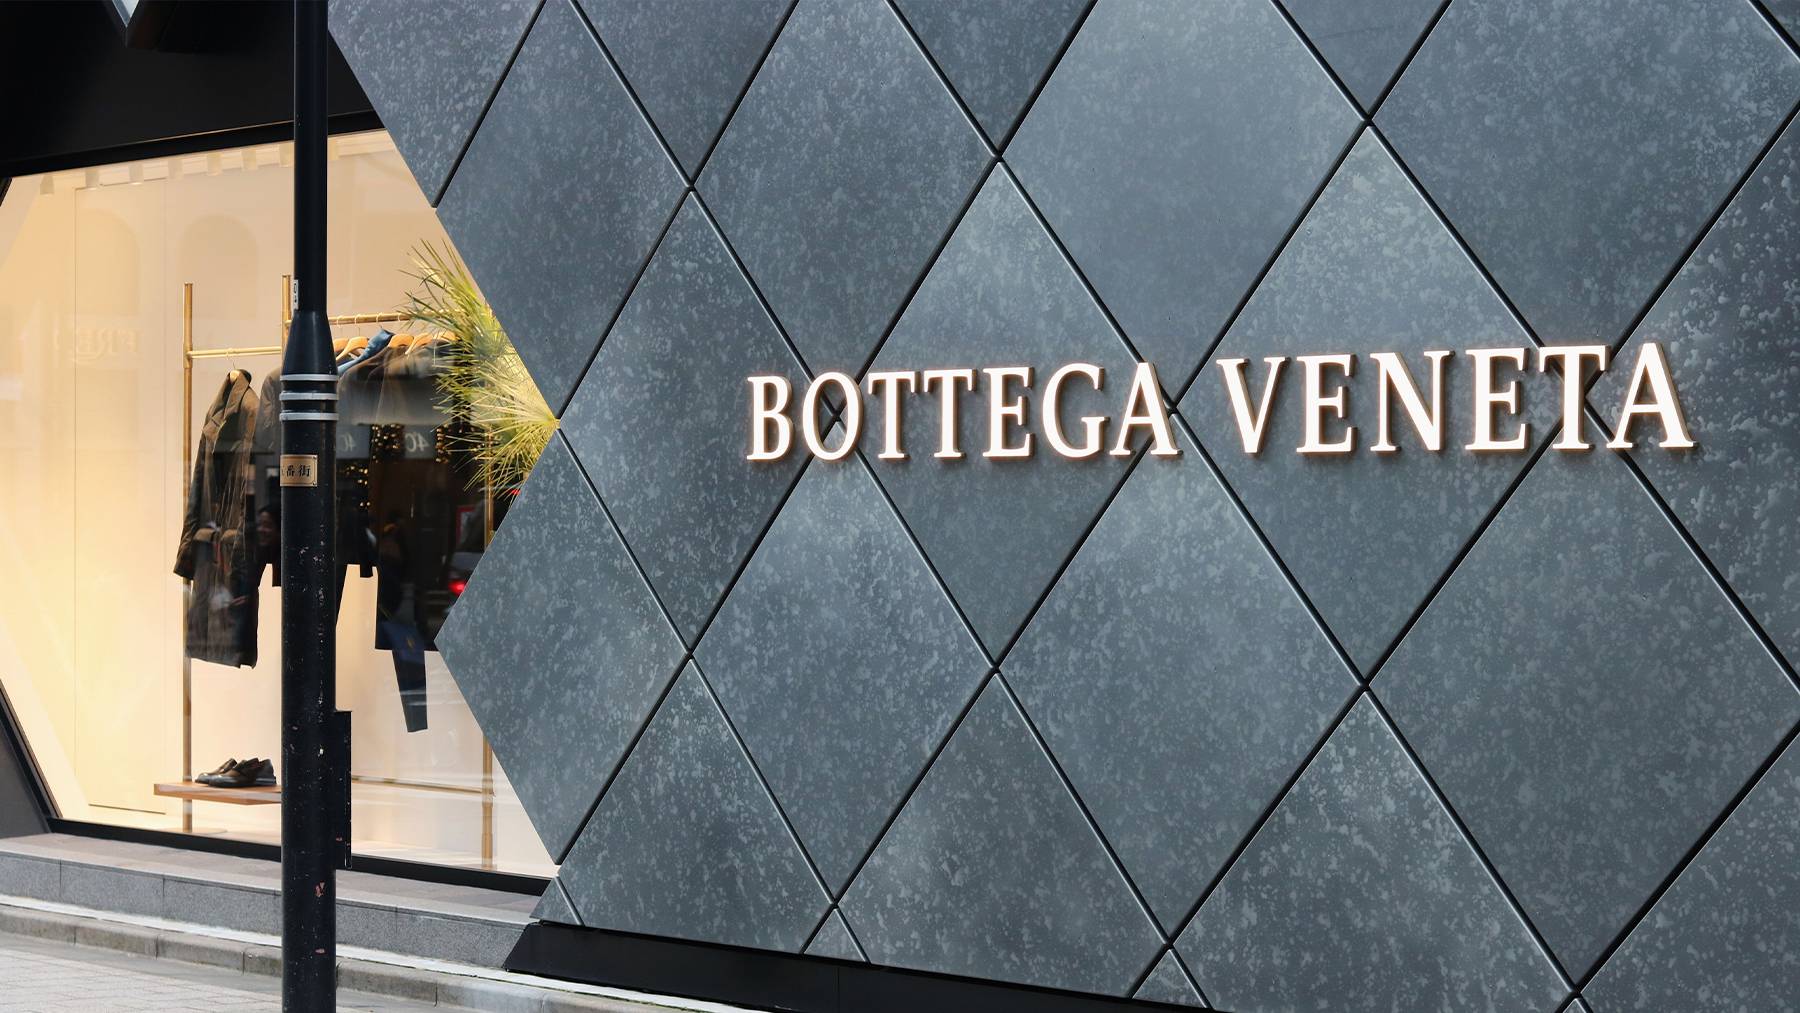 Building momentum at Bottega Veneta is on Kering's agenda this year.